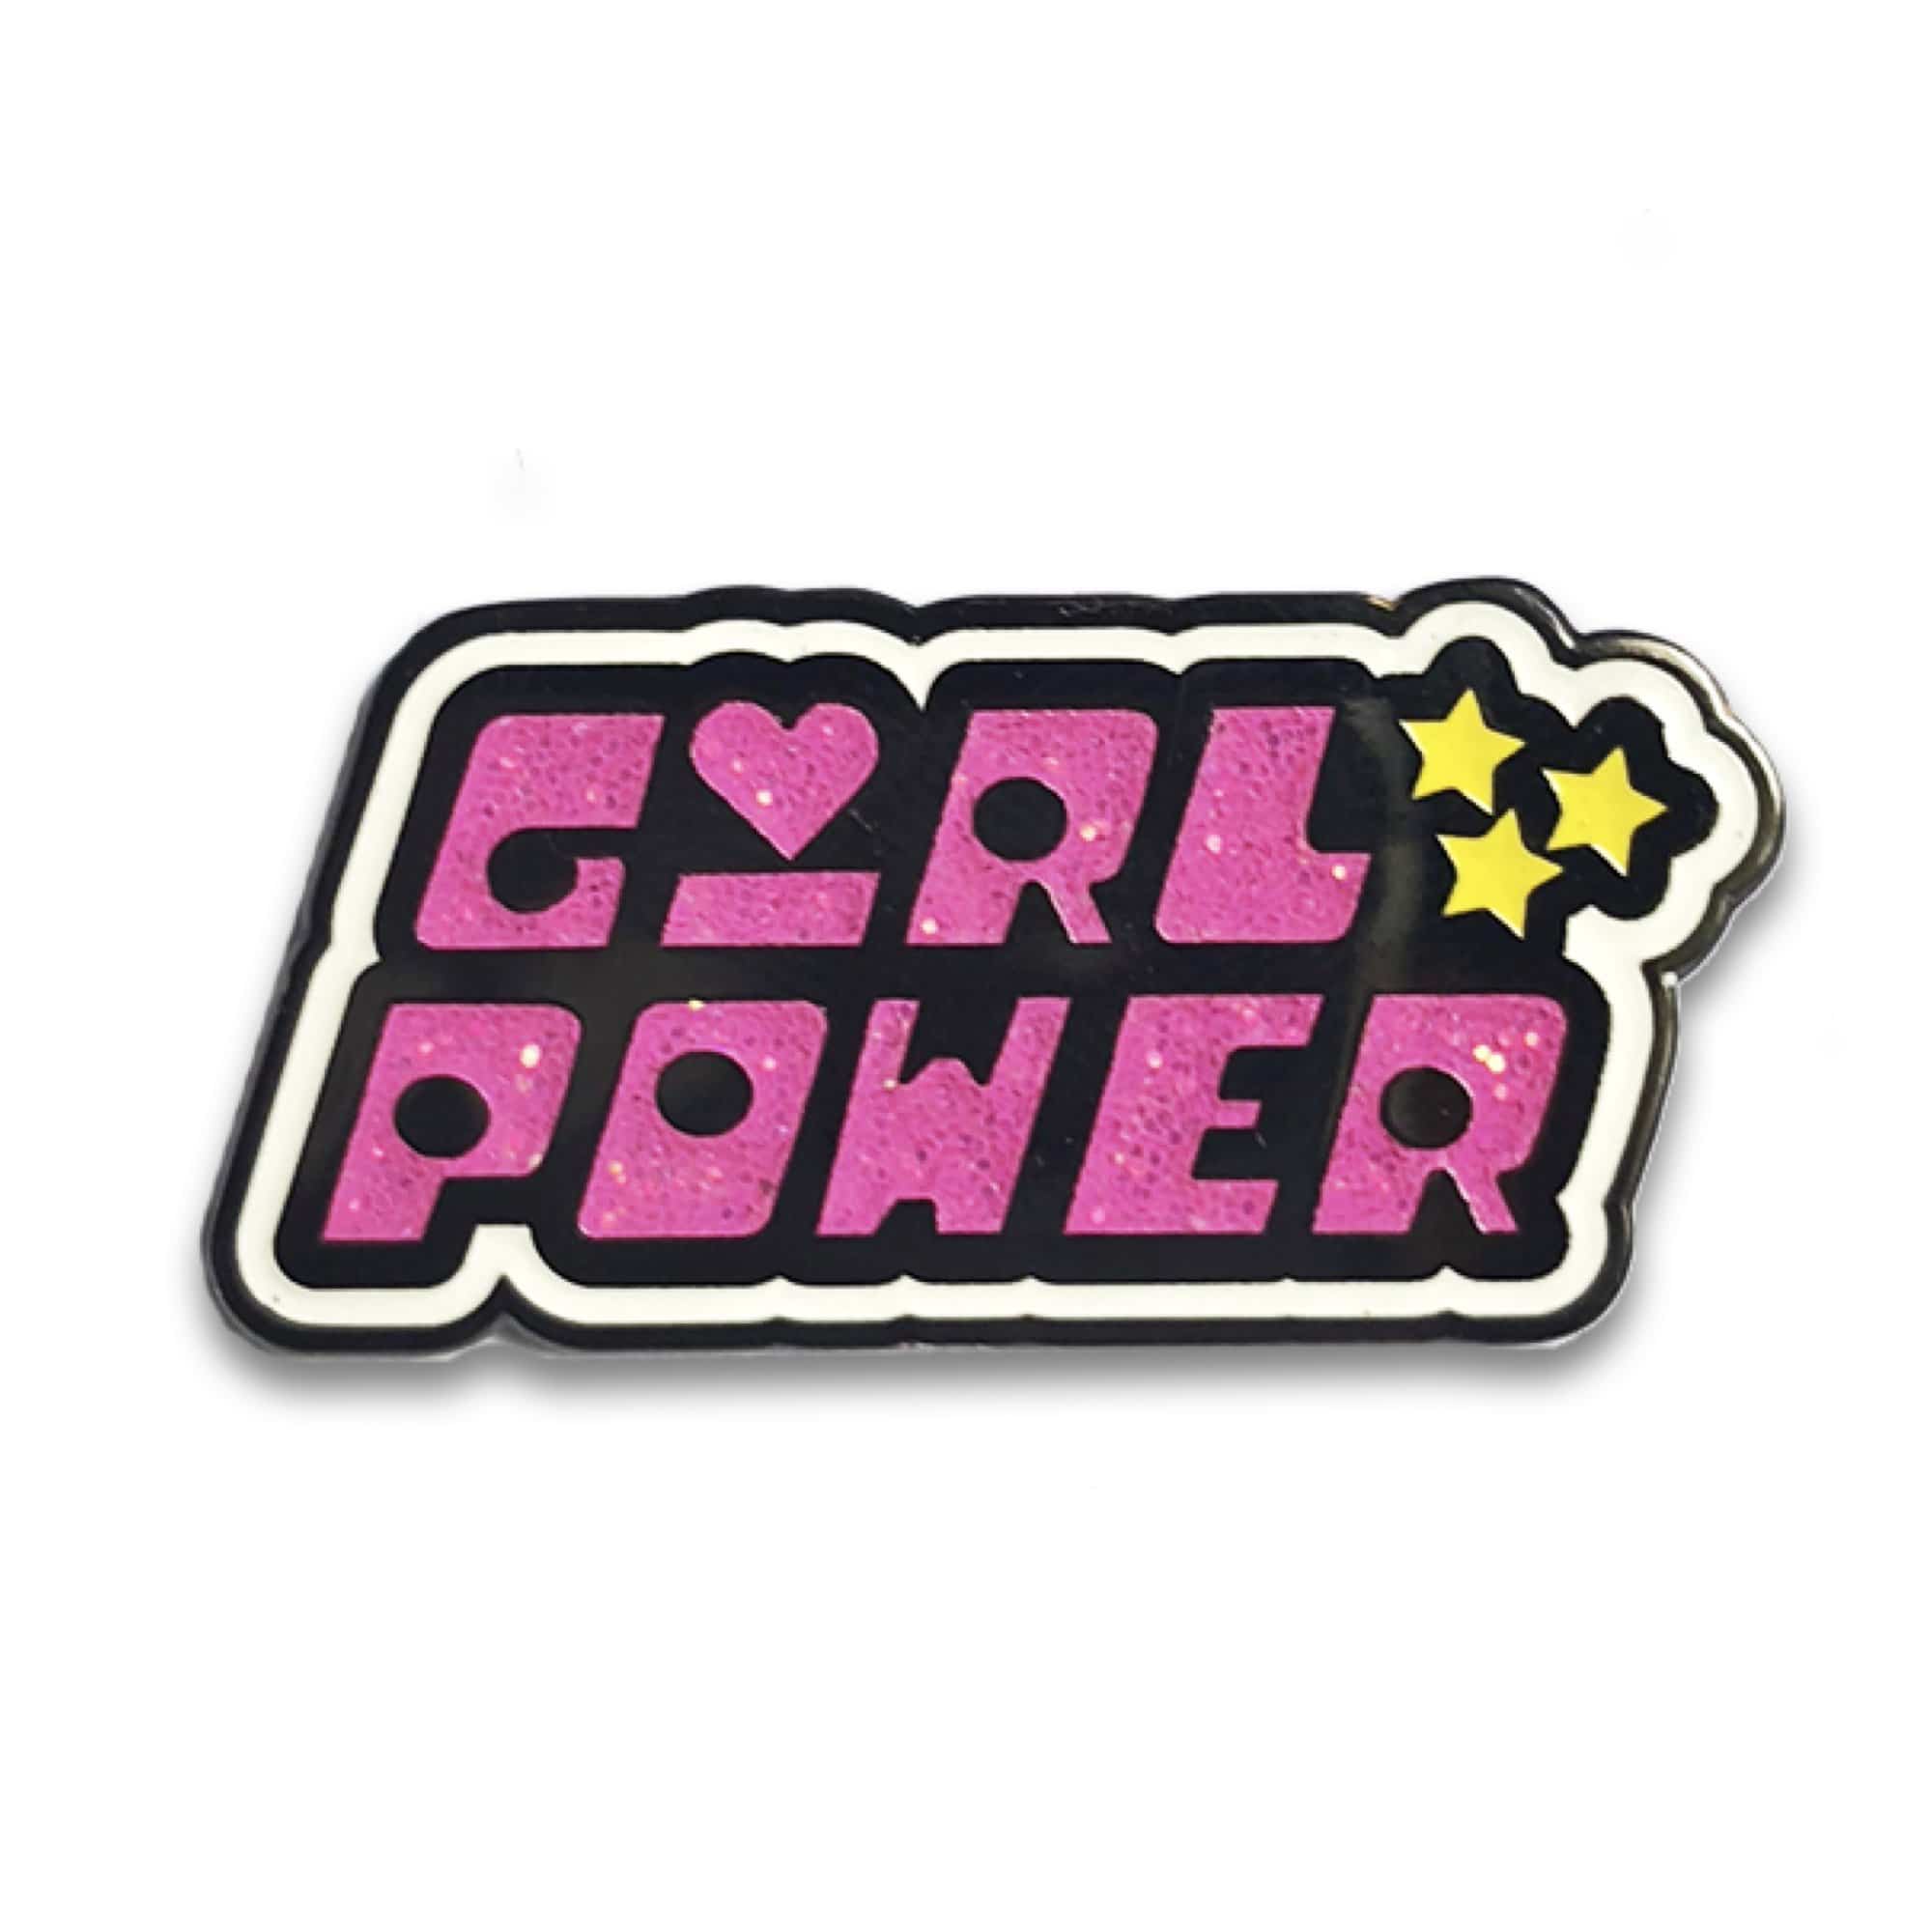 cuddlefish Girl Power pin